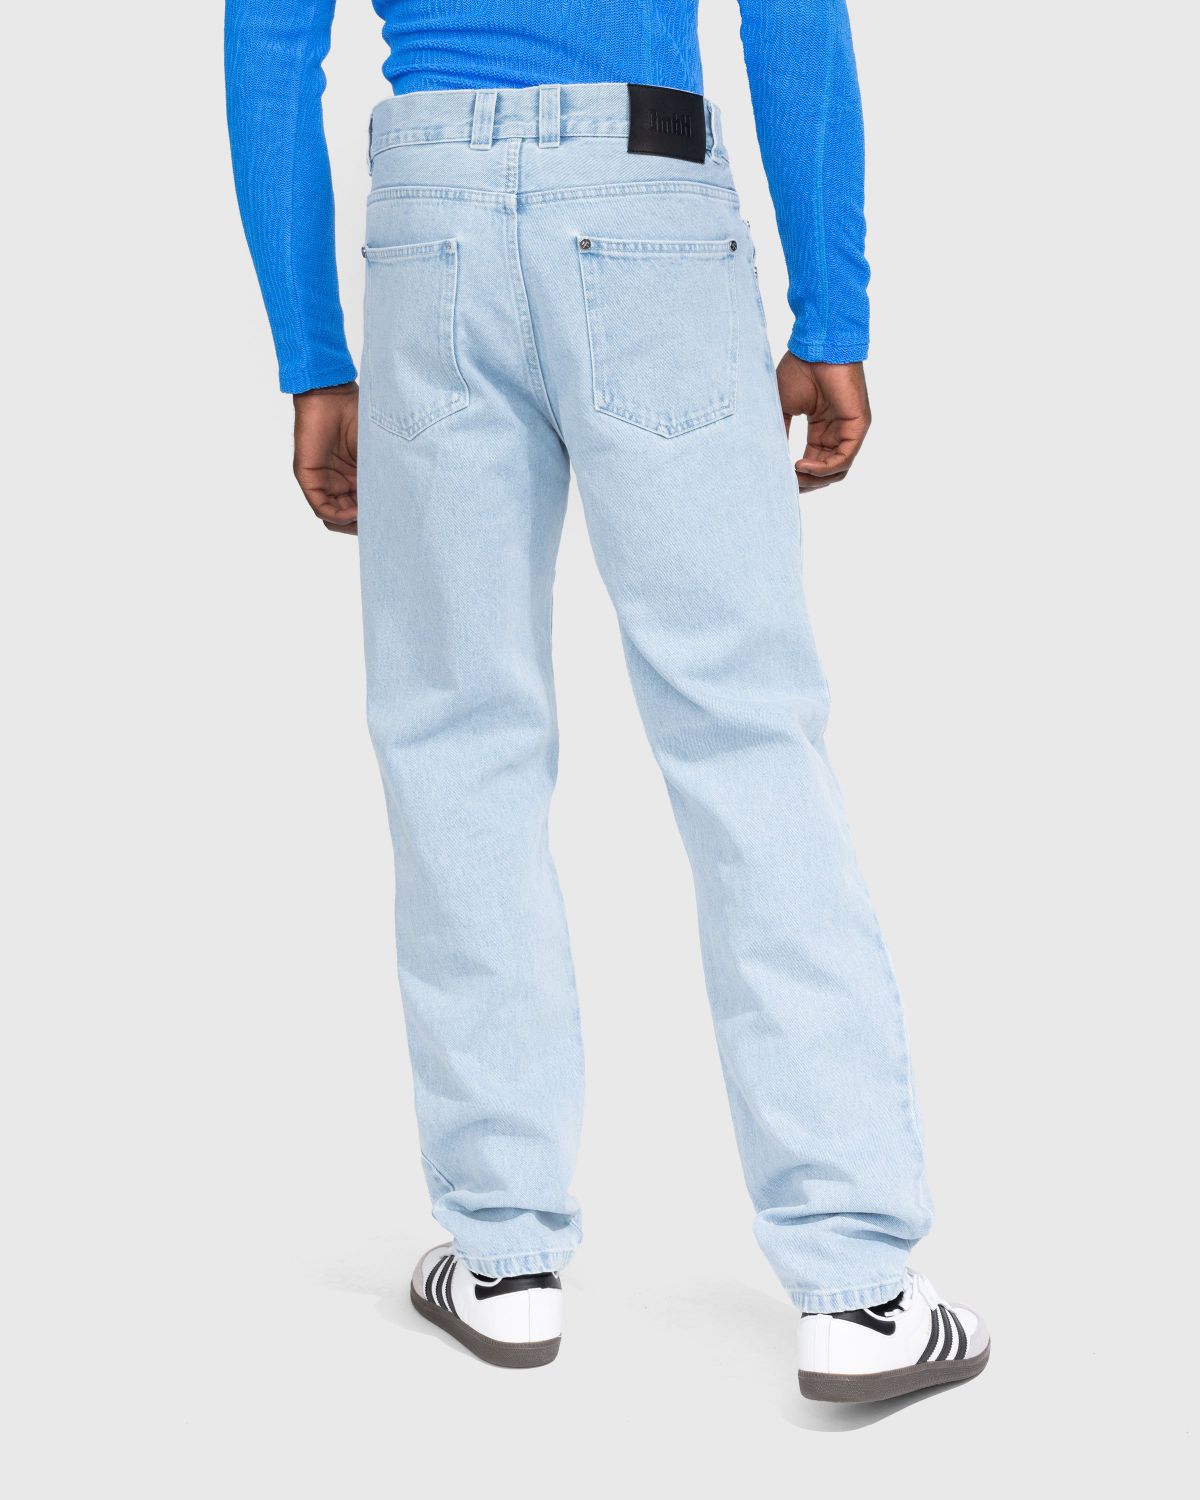 GmbH – Darveesh Denim Trousers Light Indigo Blue - Pants - Blue - Image 3